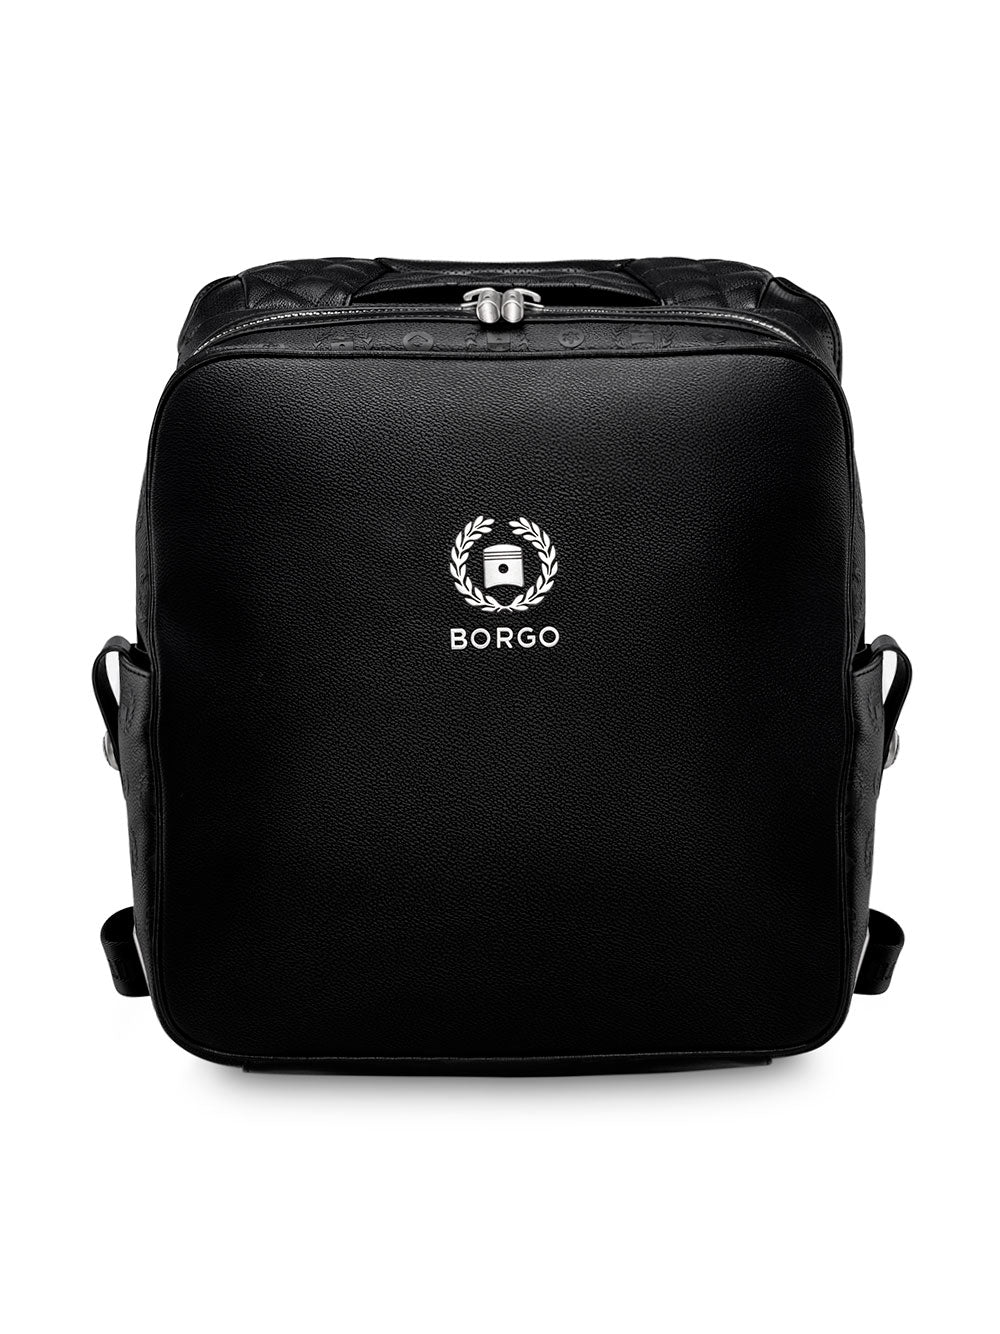 BORGO Misano Nero Backpack